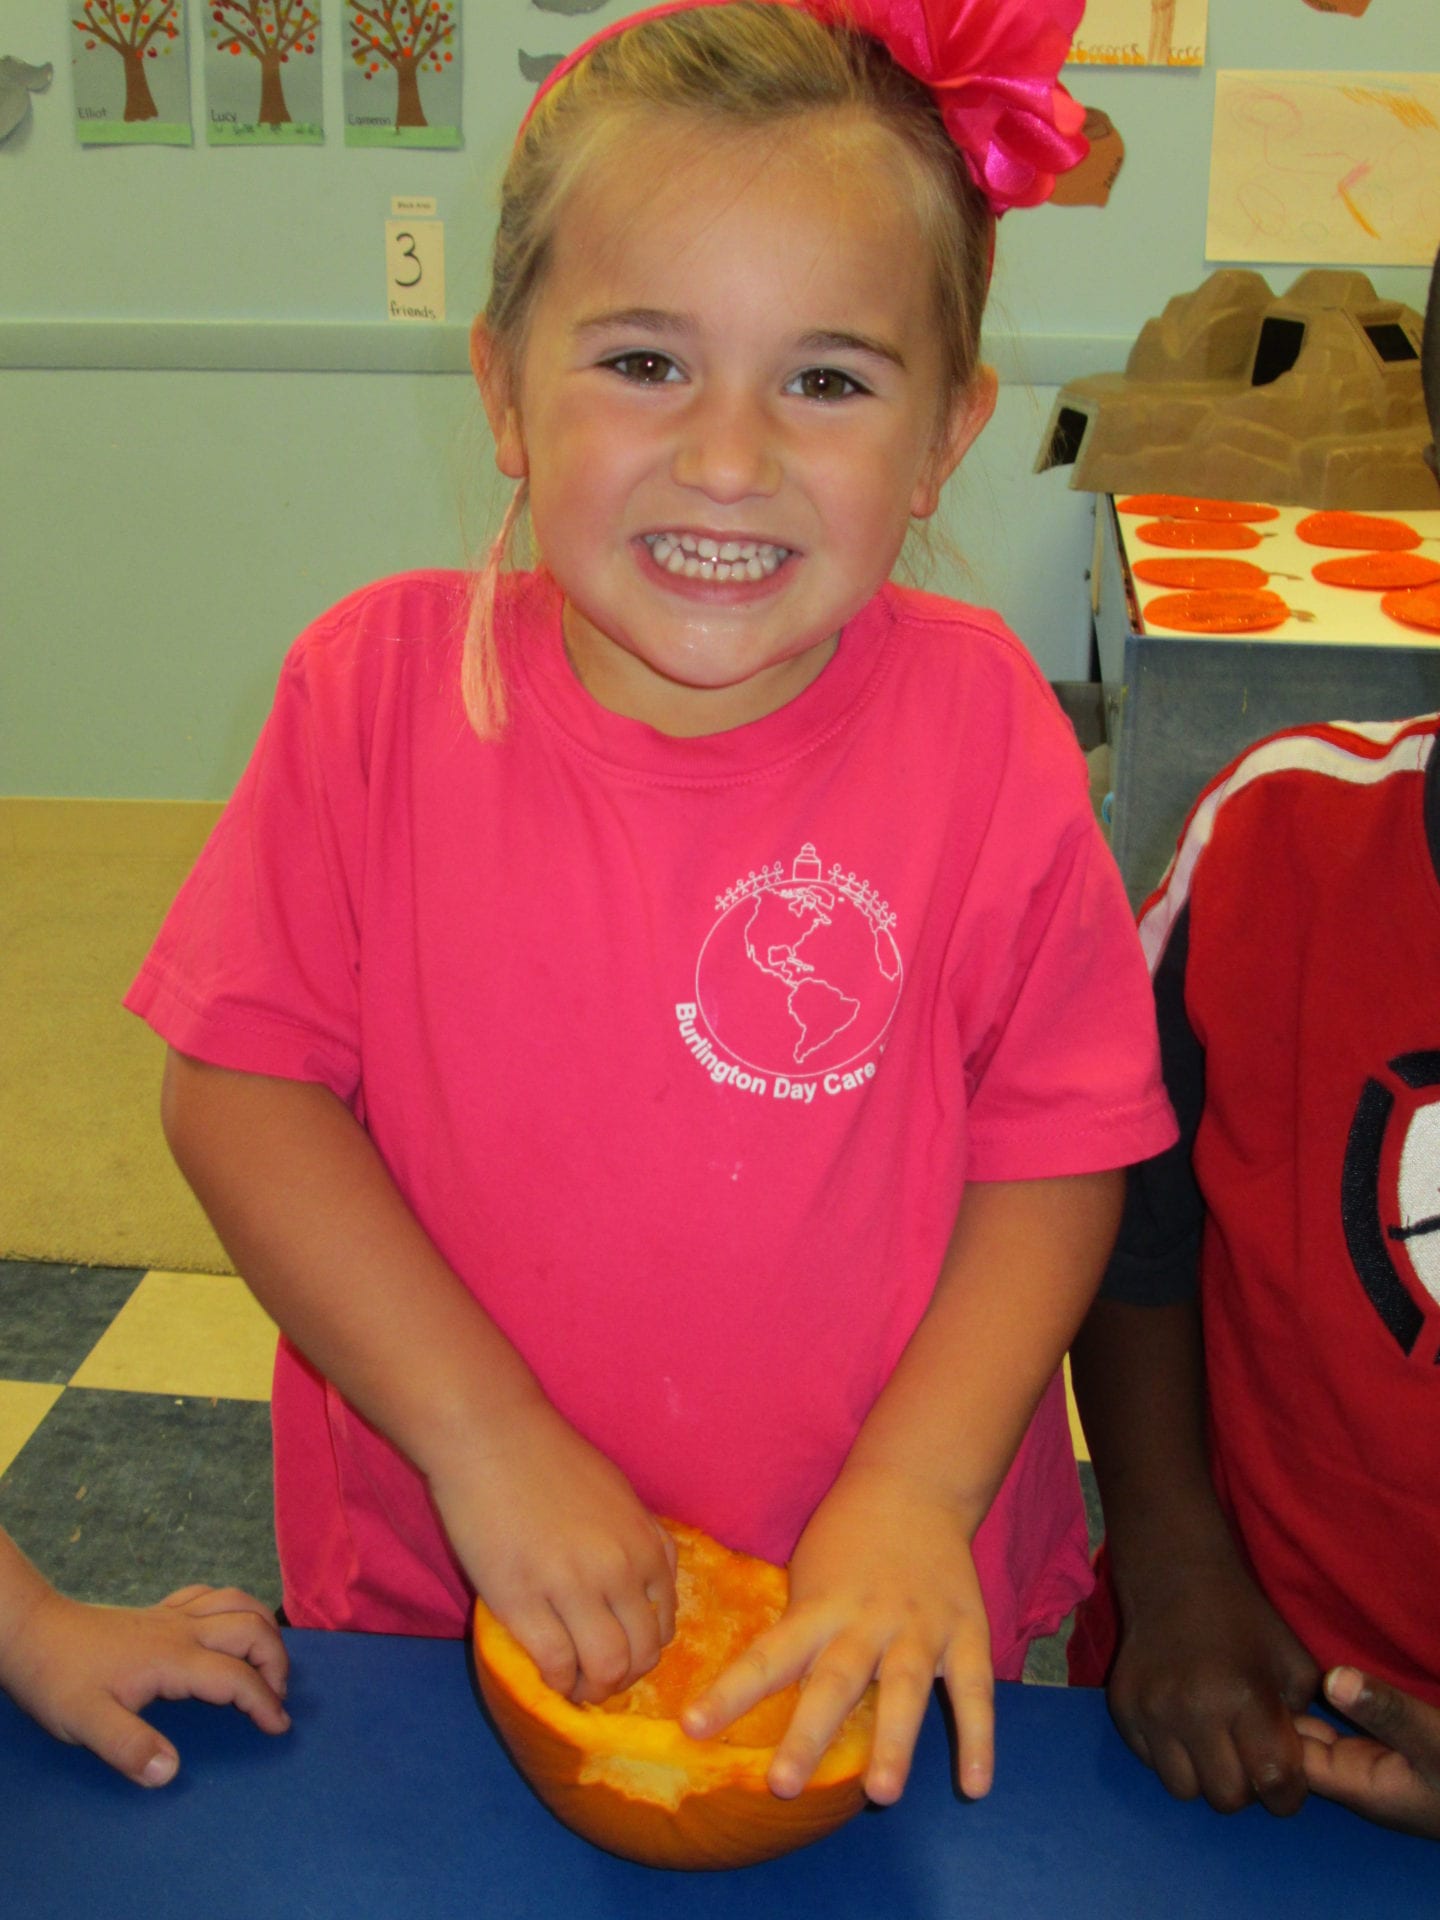 A little girl in pink shirt holding an orange.